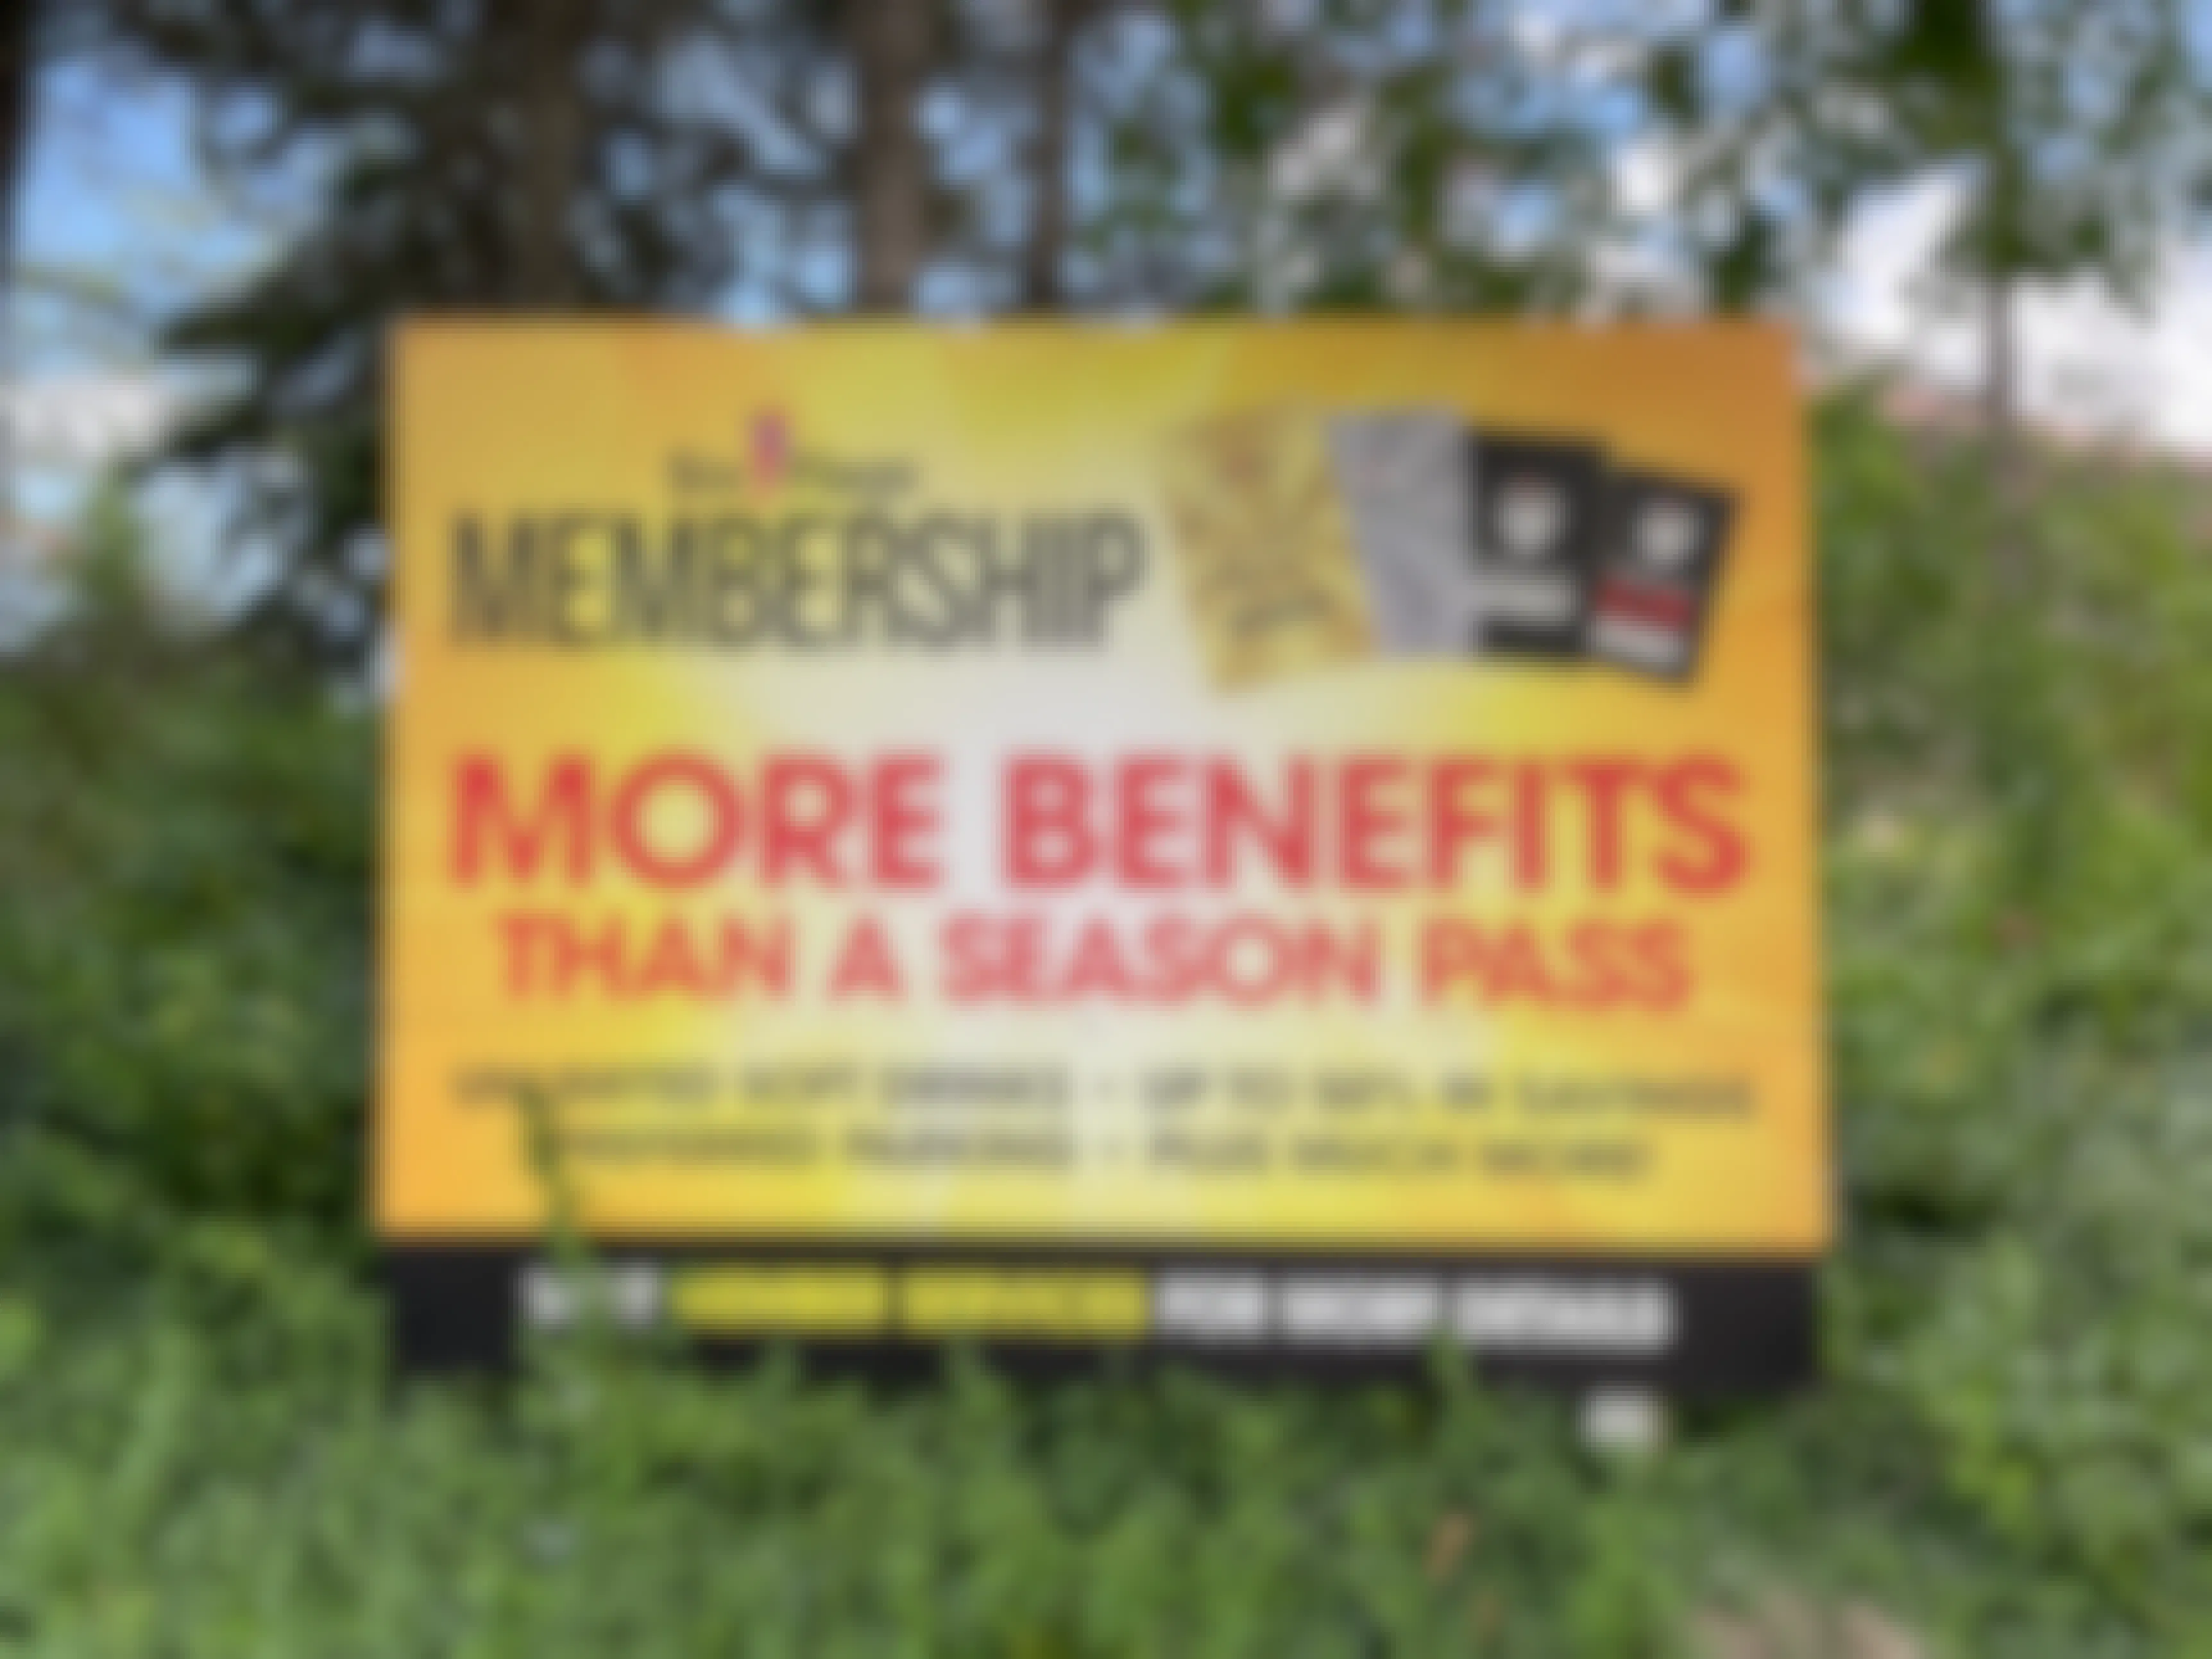 Assign detailing membership benefits for a Six Flags amusement park